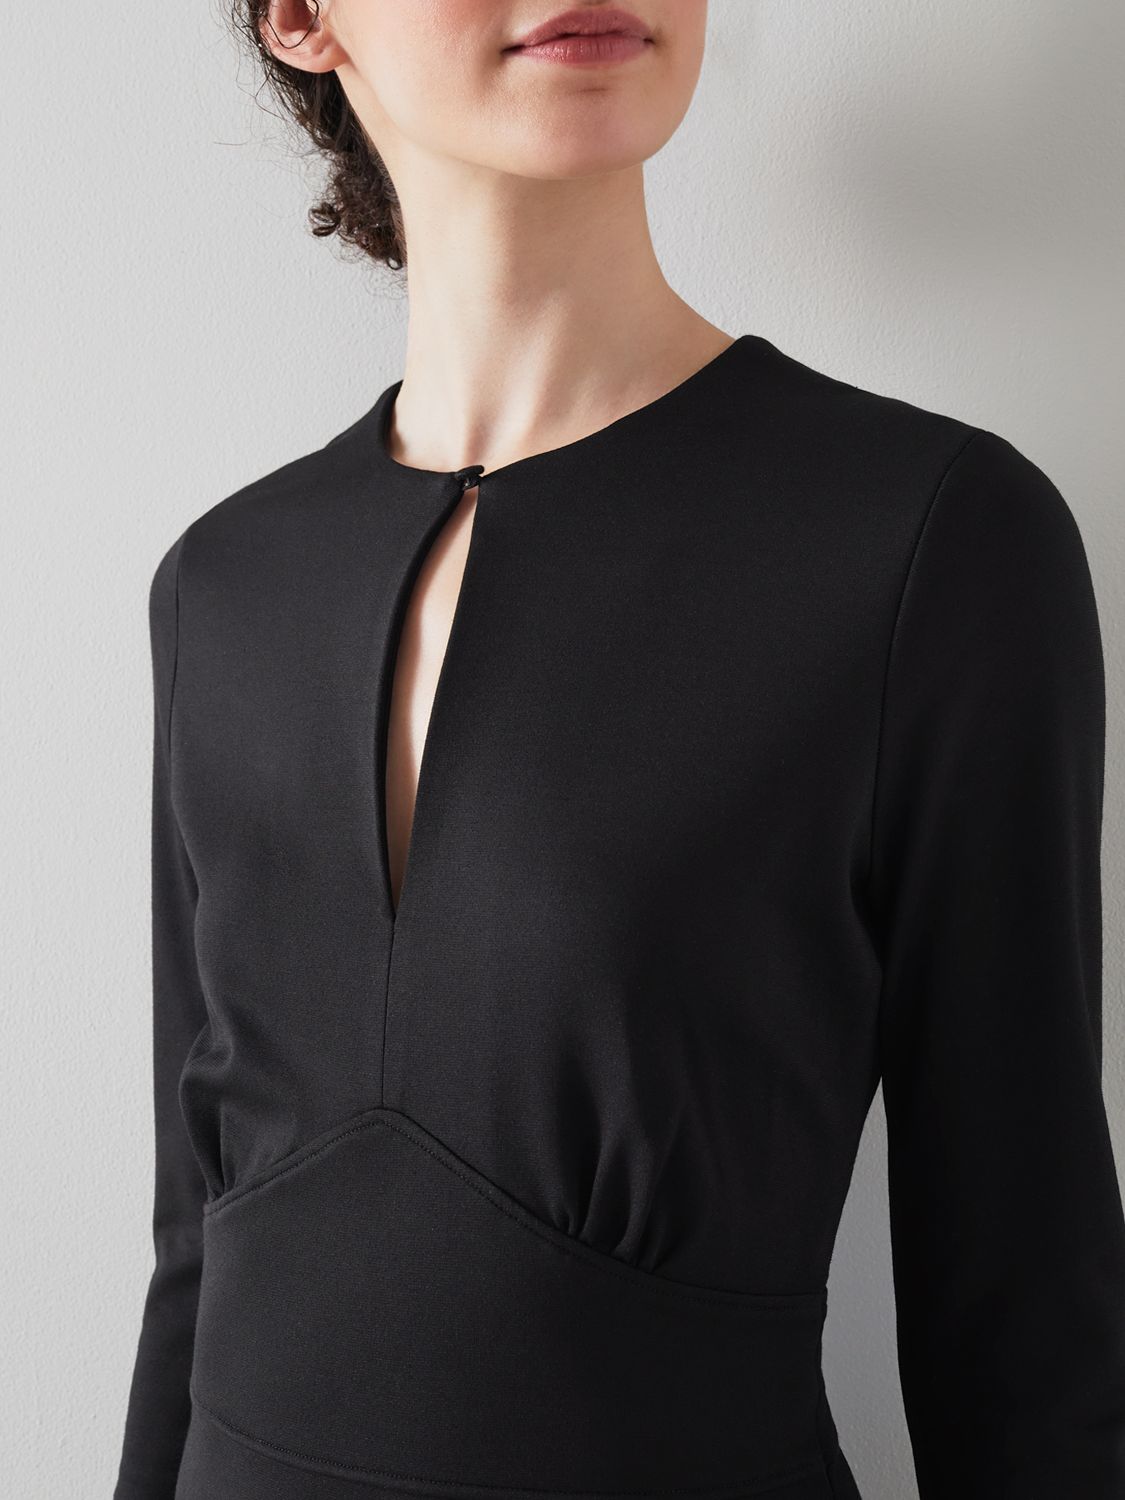 L.K.Bennett Sera Viscose Mix Dress, Black at John Lewis & Partners